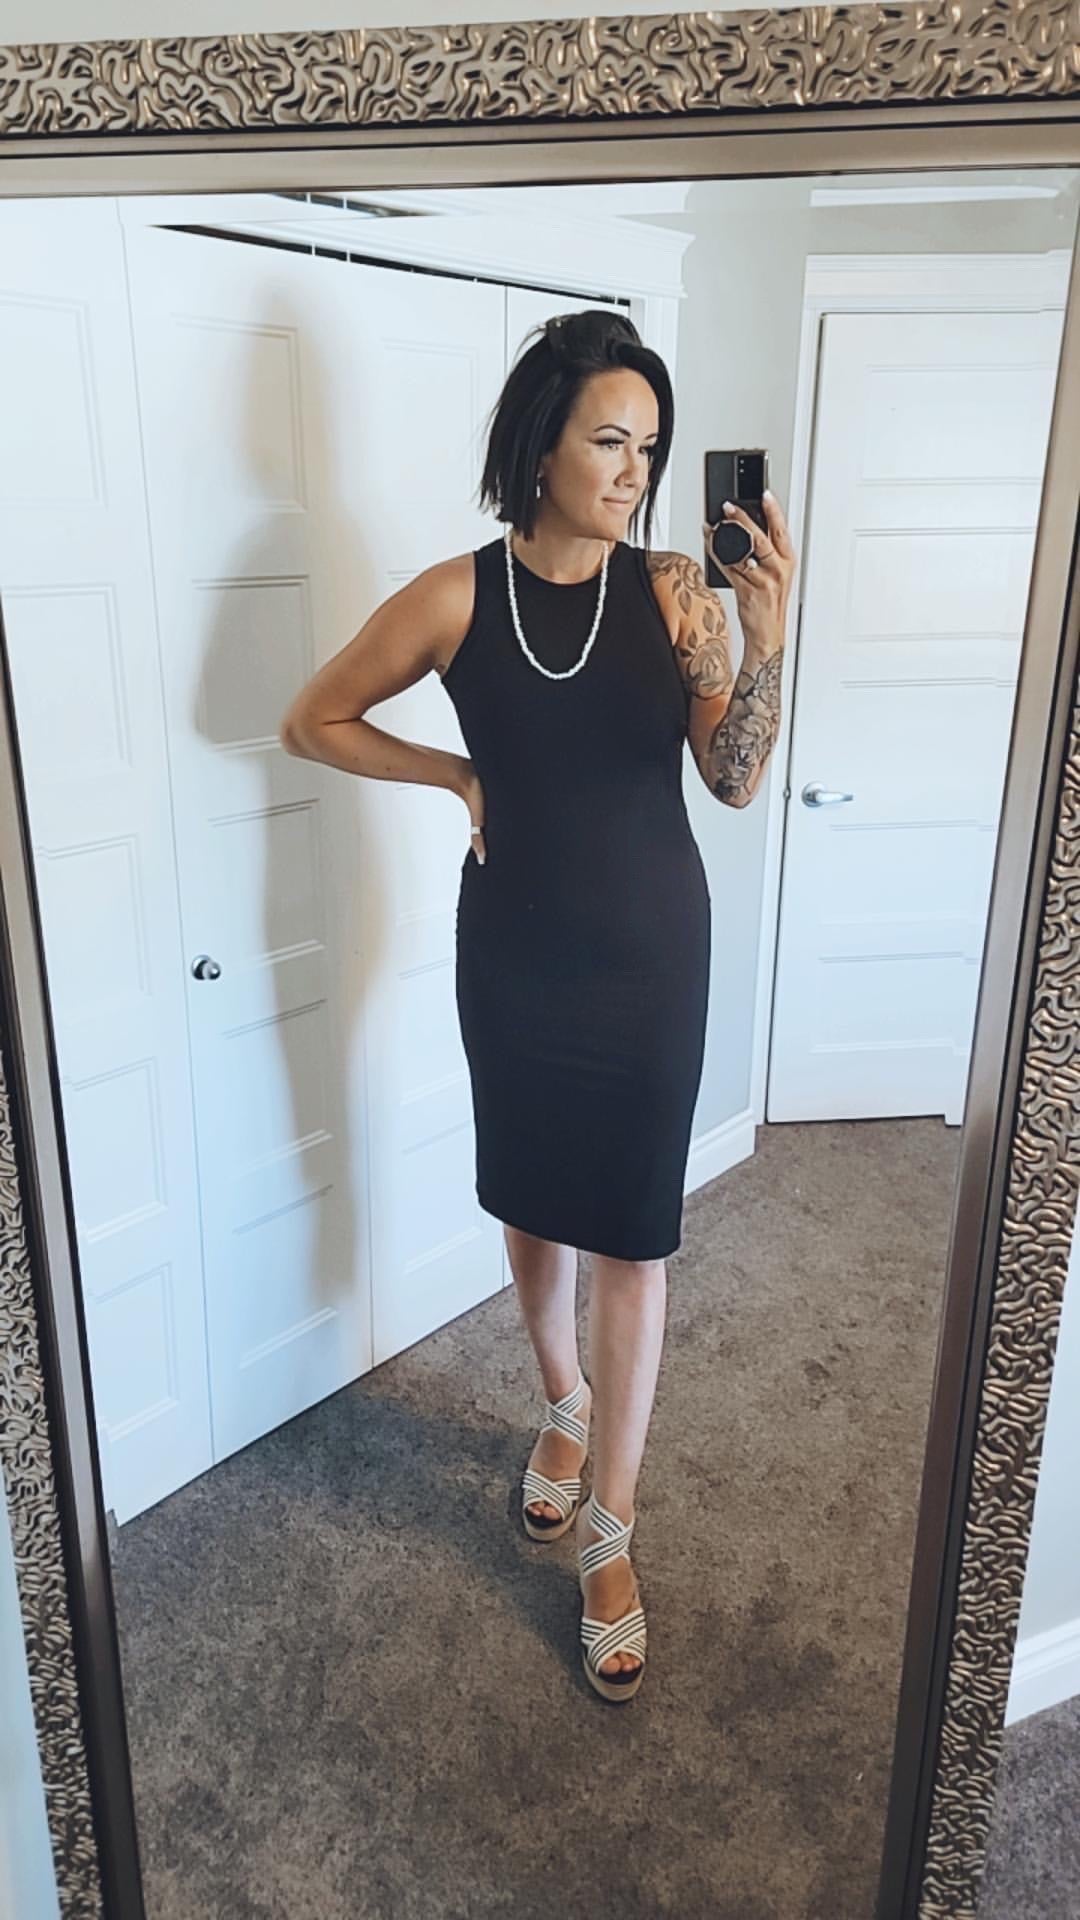 woman wearing black midi tank dress standing in mirror